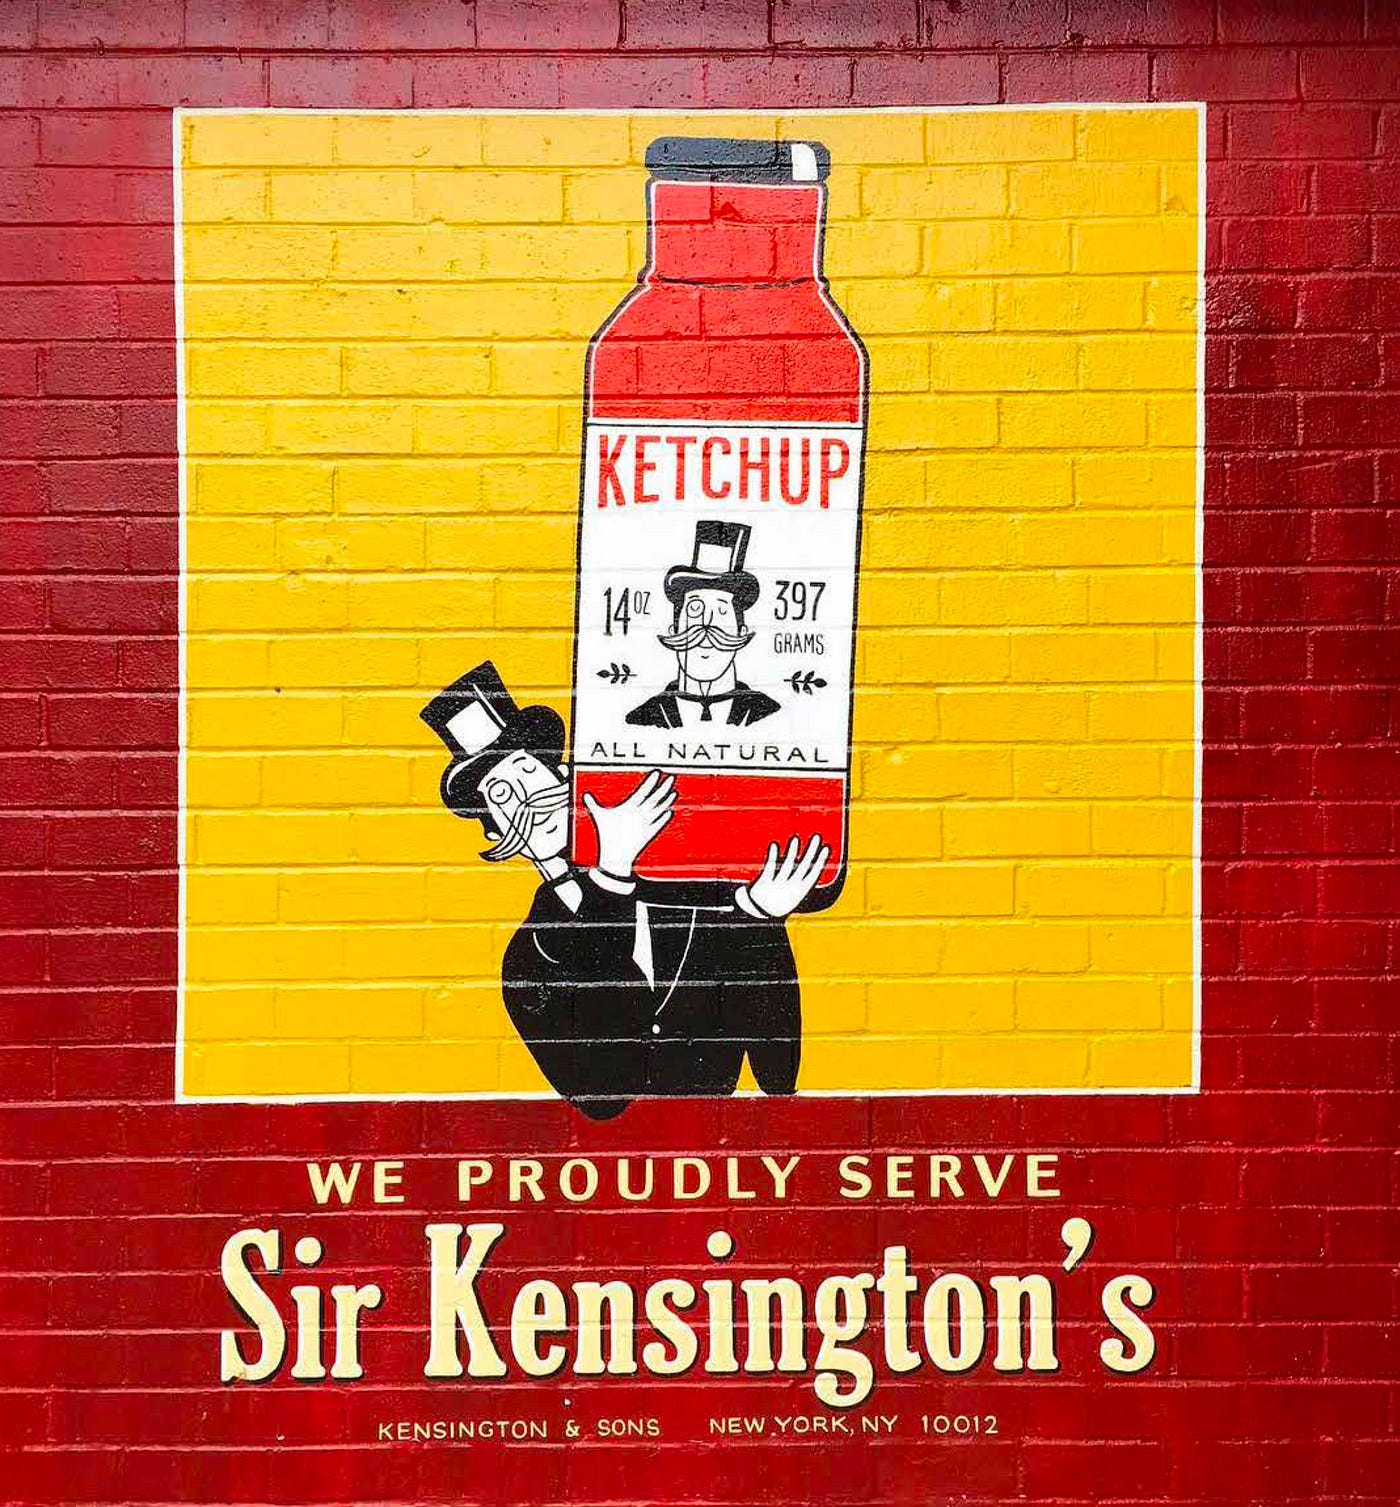 Sir Kensington's Ketchup: A Eulogy | by Scott Norton | Medium